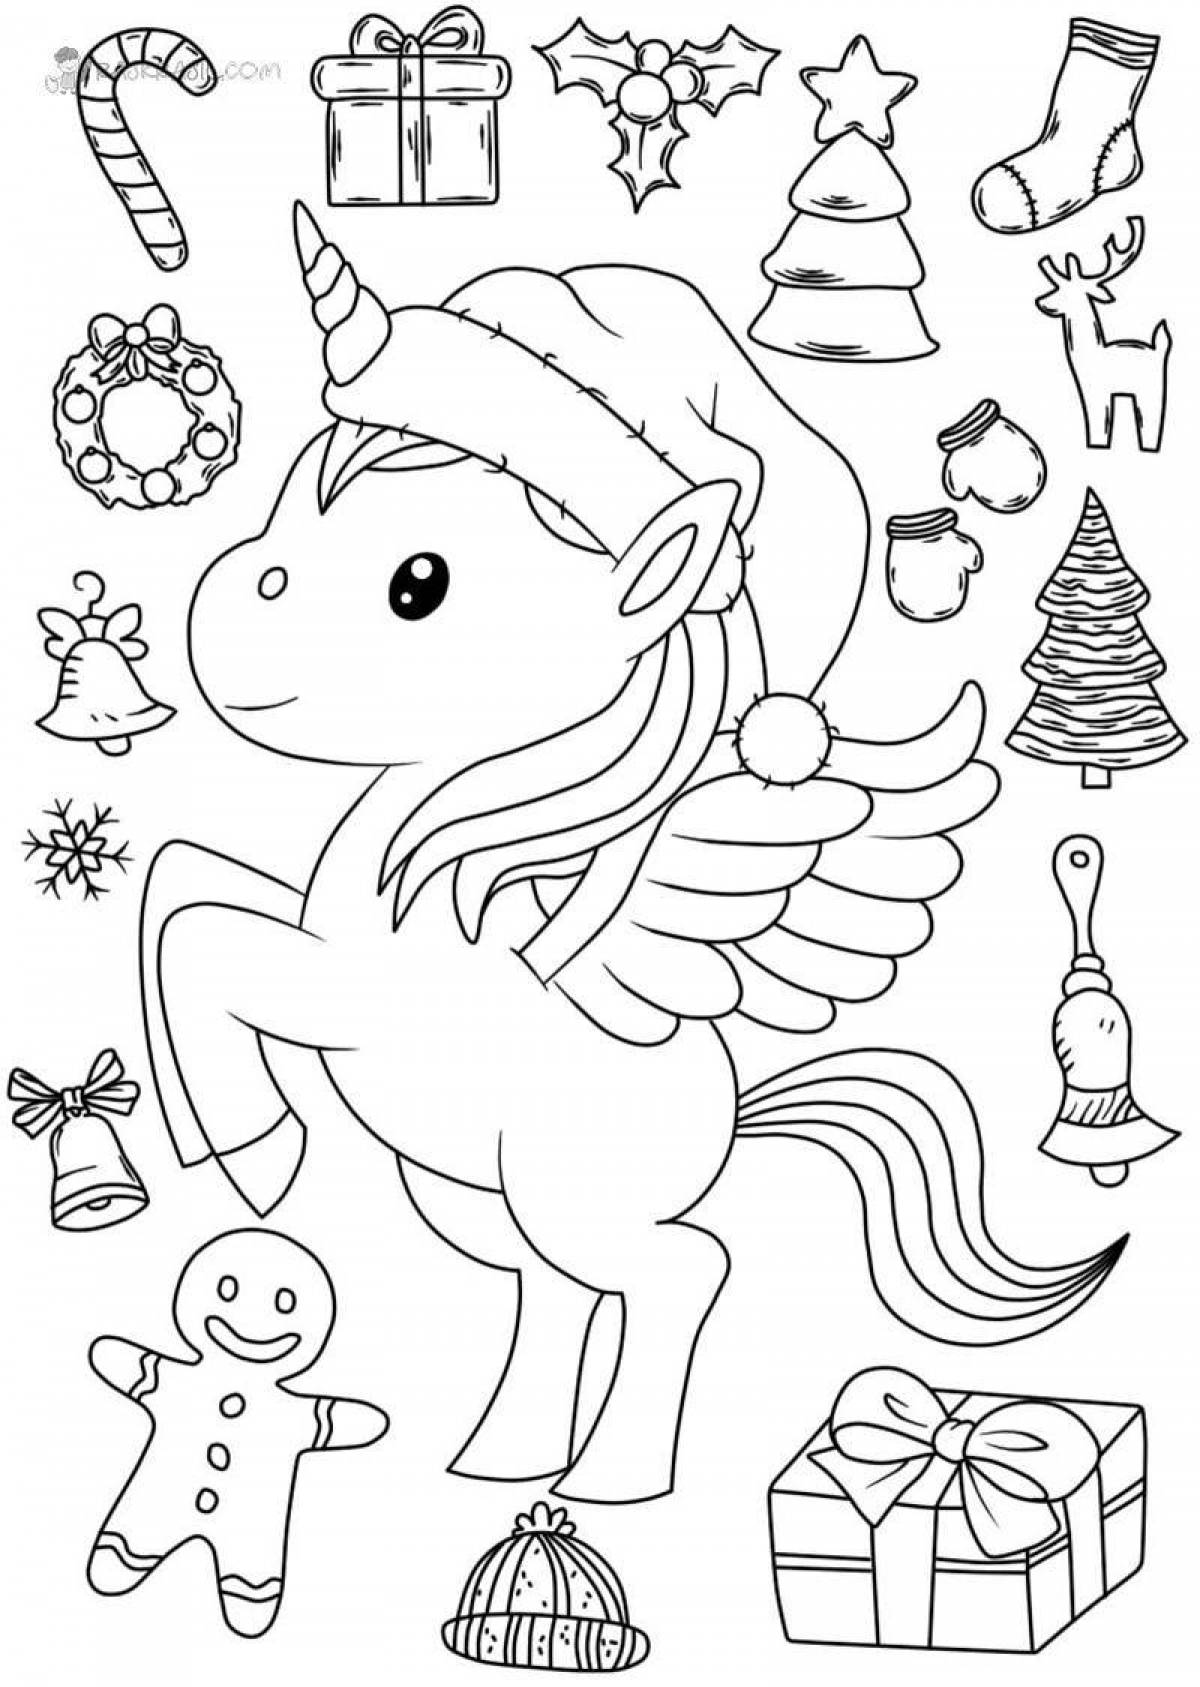 Adorable unicorn Christmas coloring book